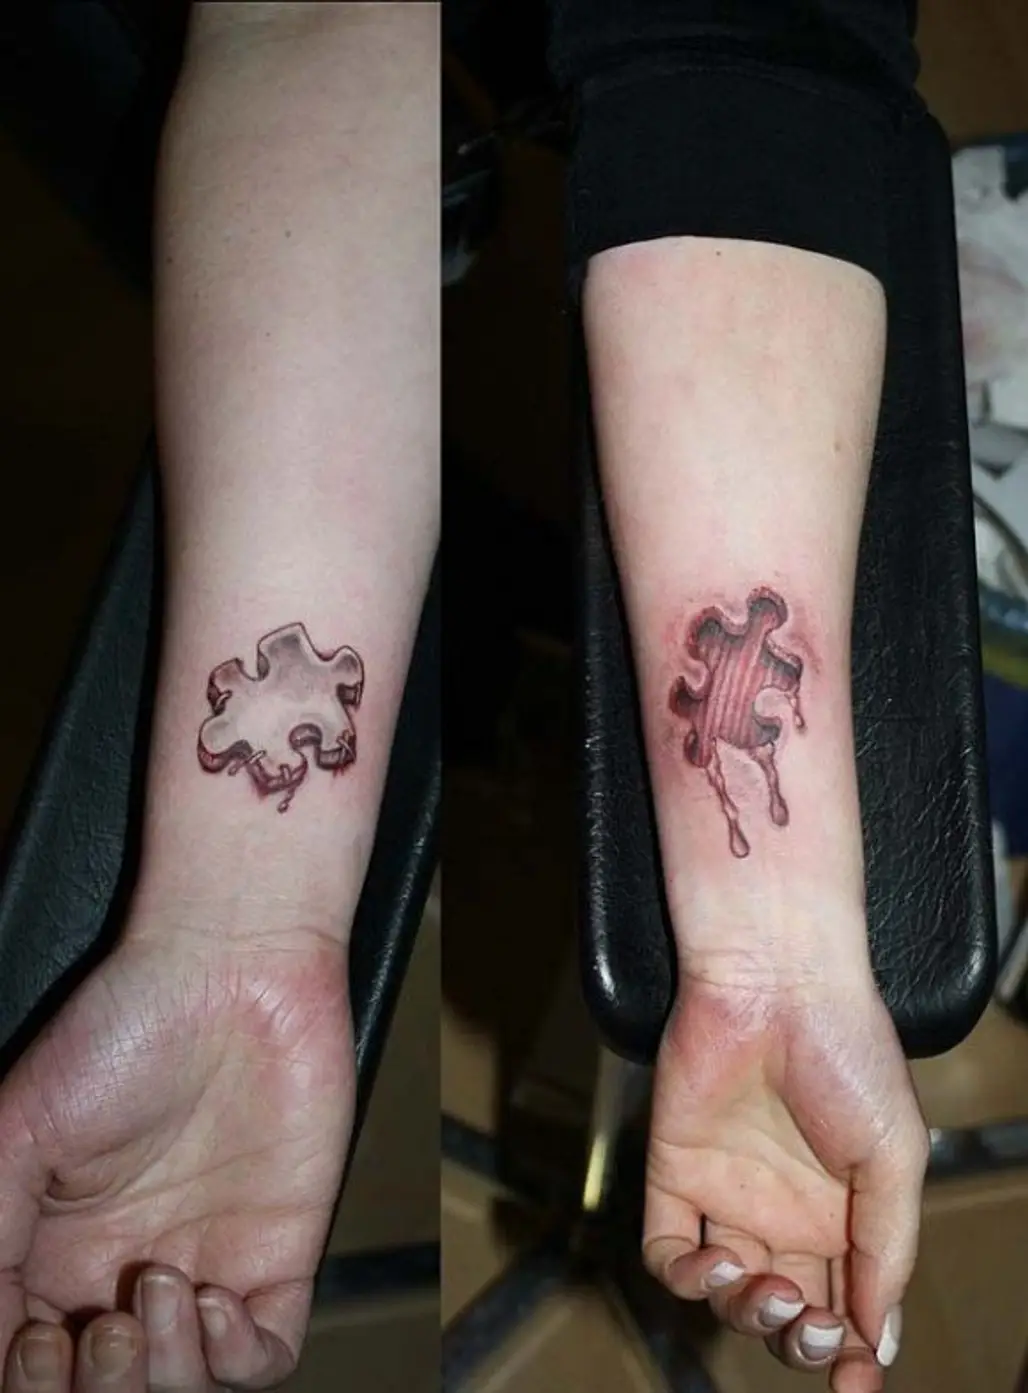 tattoo,finger,leg,nail,arm,